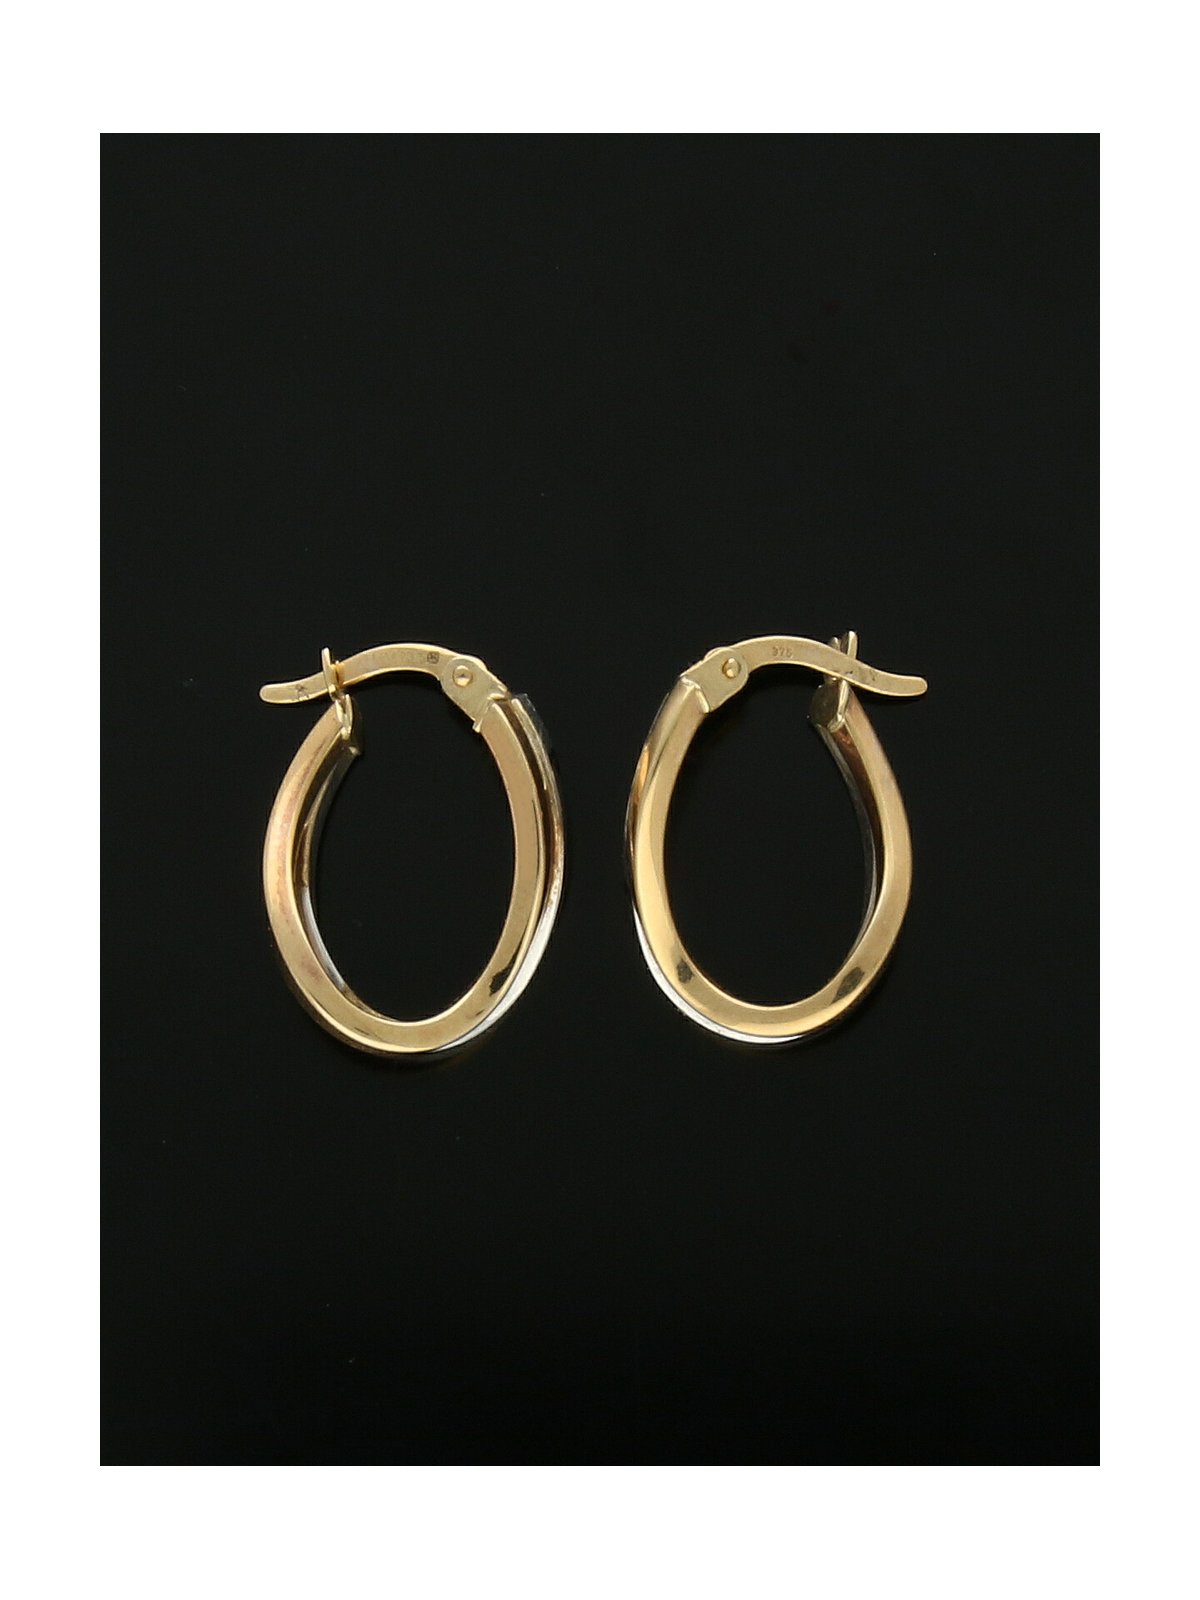 Elongated Wavy Hoop Earrings 13mm in 9ct Yellow & White Gold